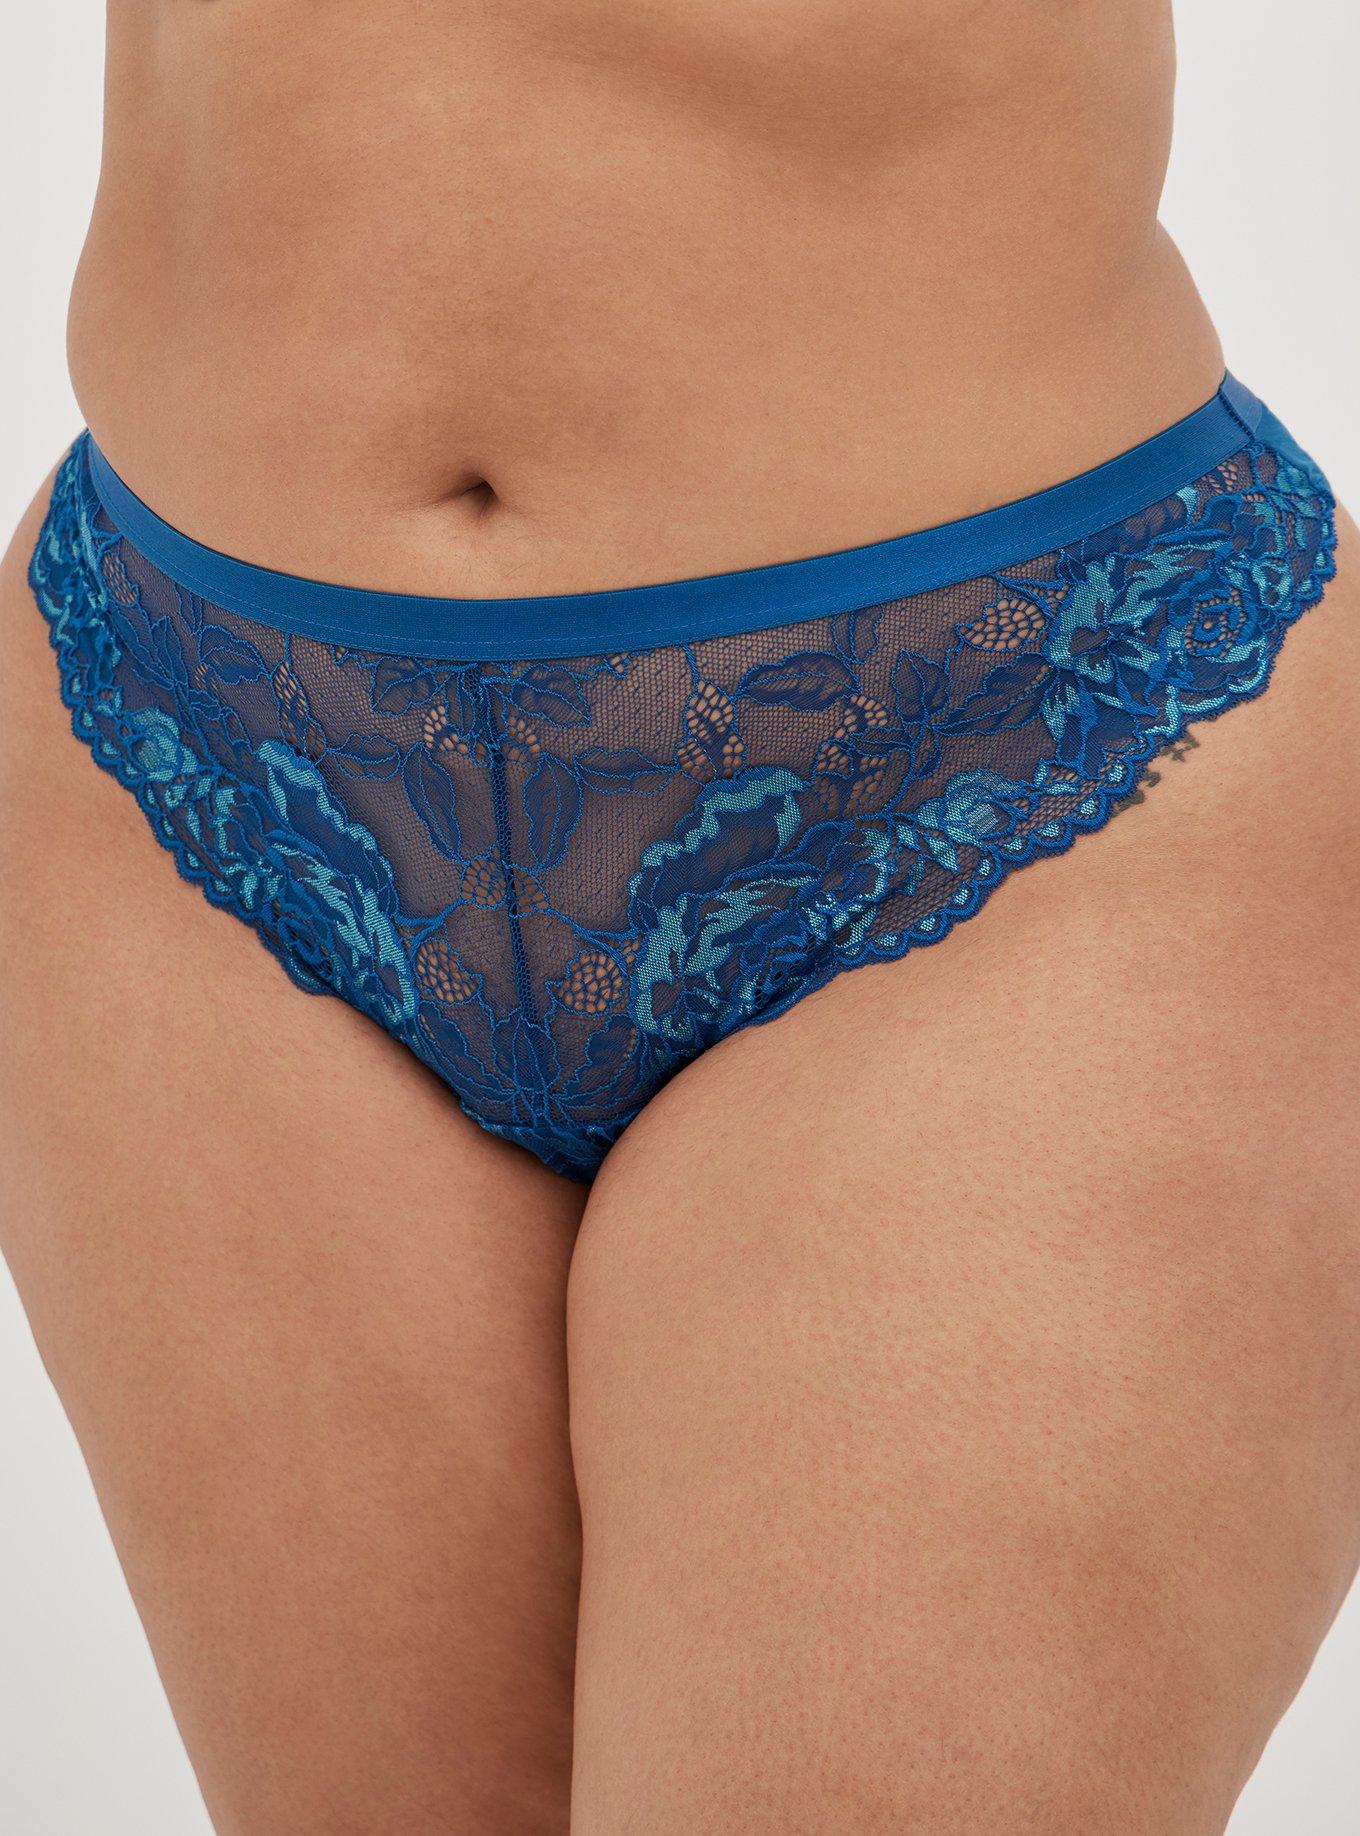 Womans Brazilian French Knickers Lace Panties Briefs Lingerie Plus Size 